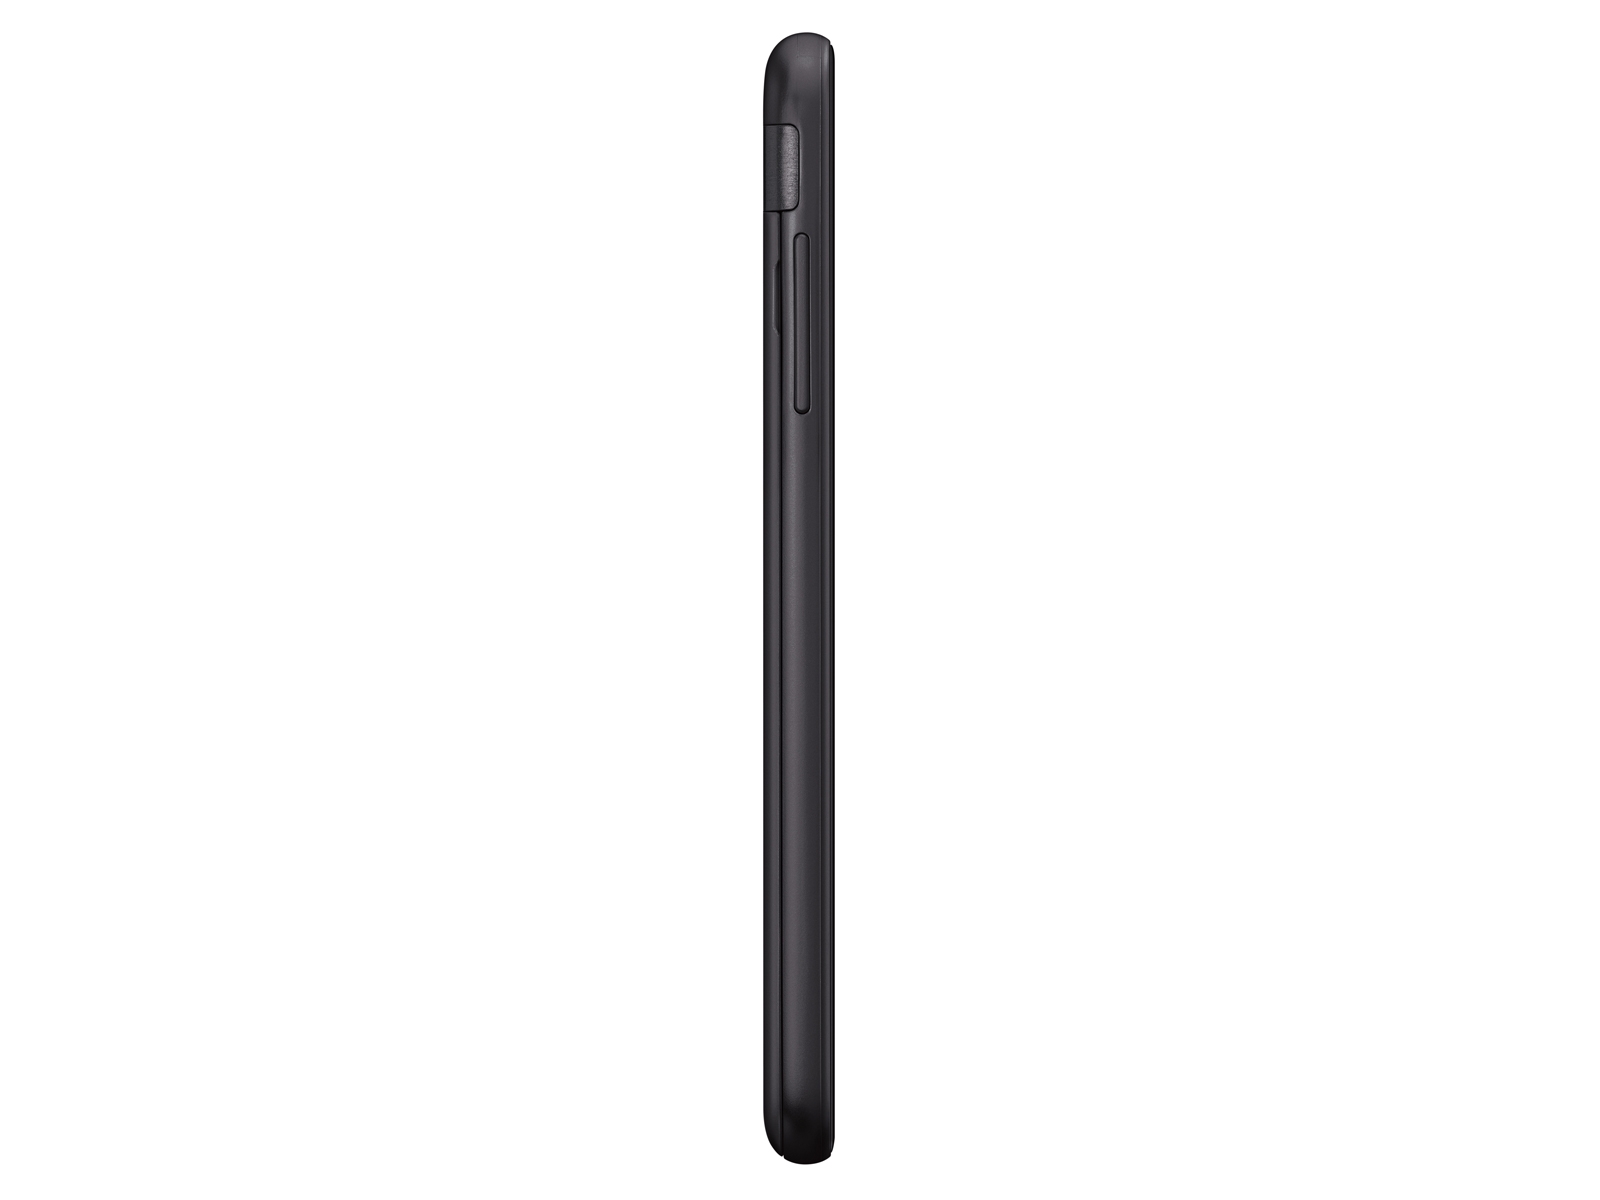 Téléphone Mobile SAMSUNG Galaxy J3 6 8Go Noir - Téléphones mobiles -  Téléphonie - Réseau et téléphonie - Technologie - Tous ALL WHAT OFFICE NEEDS